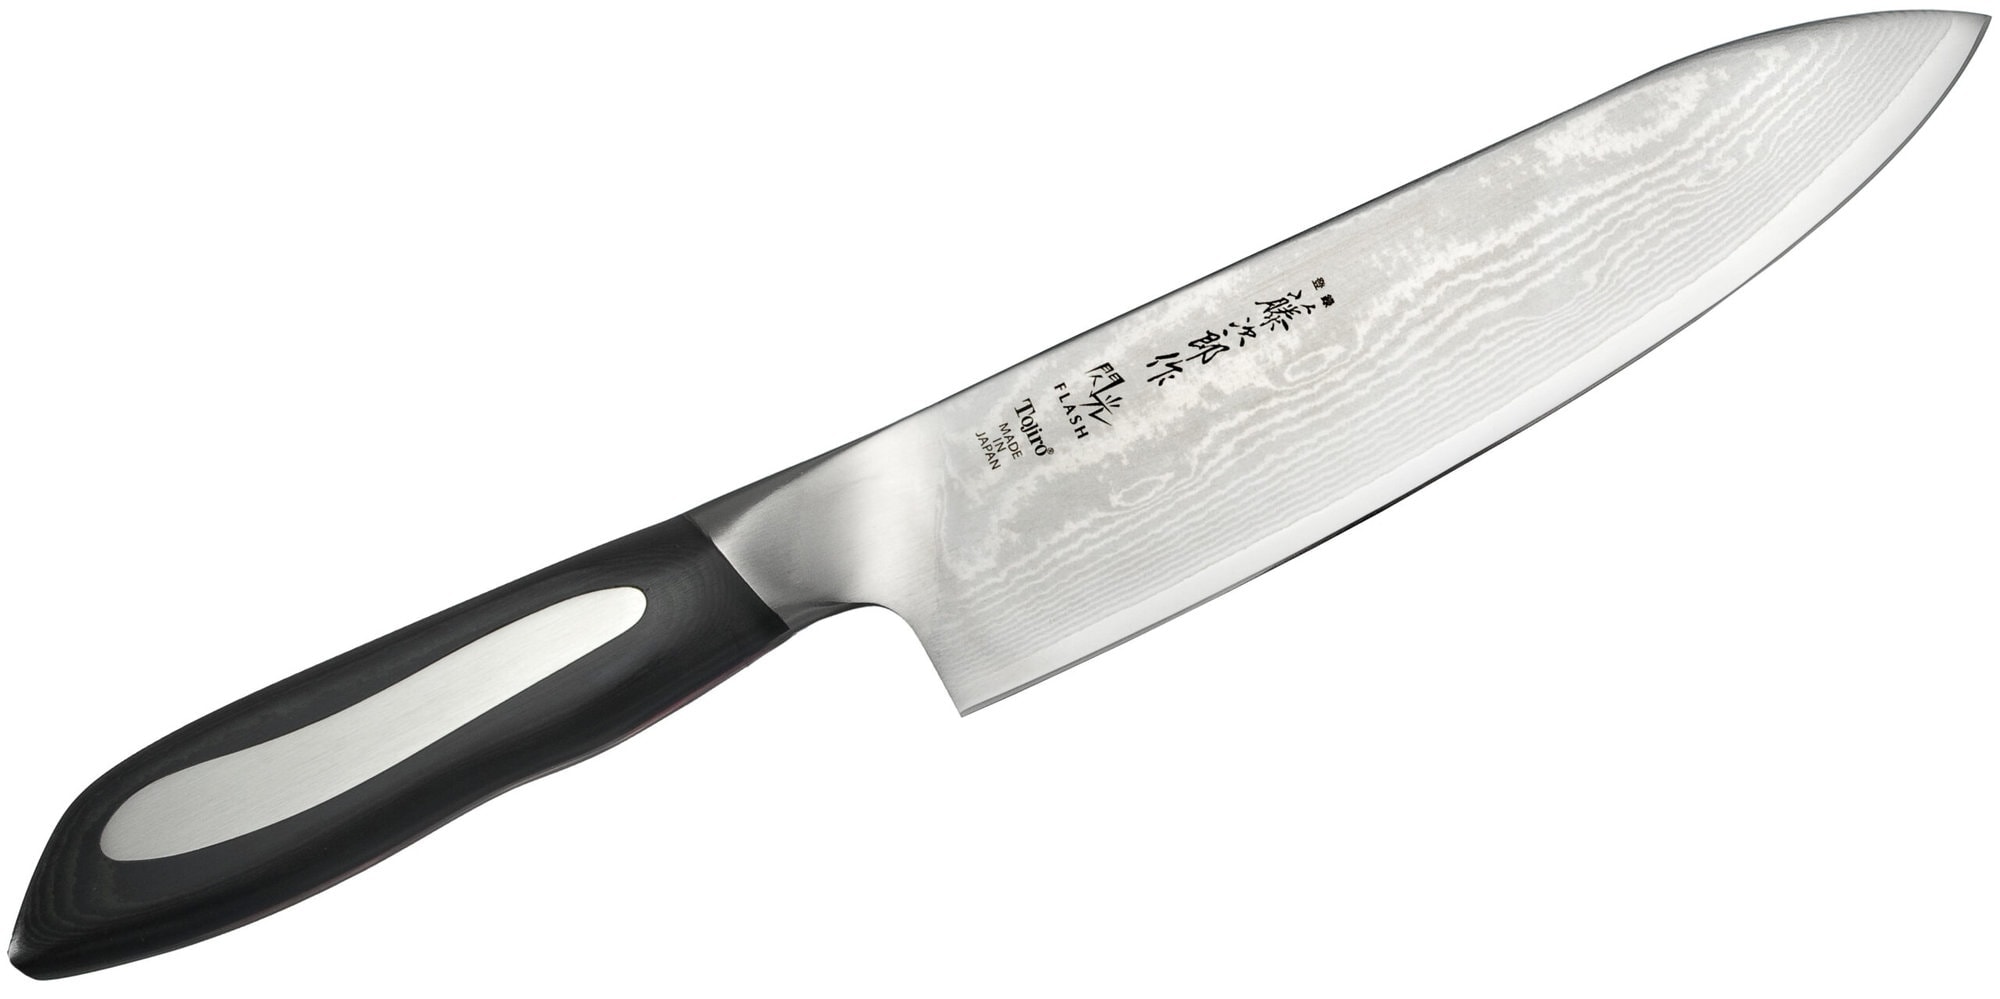 Tojiro Flash Nóż szefa kuchni 18cm